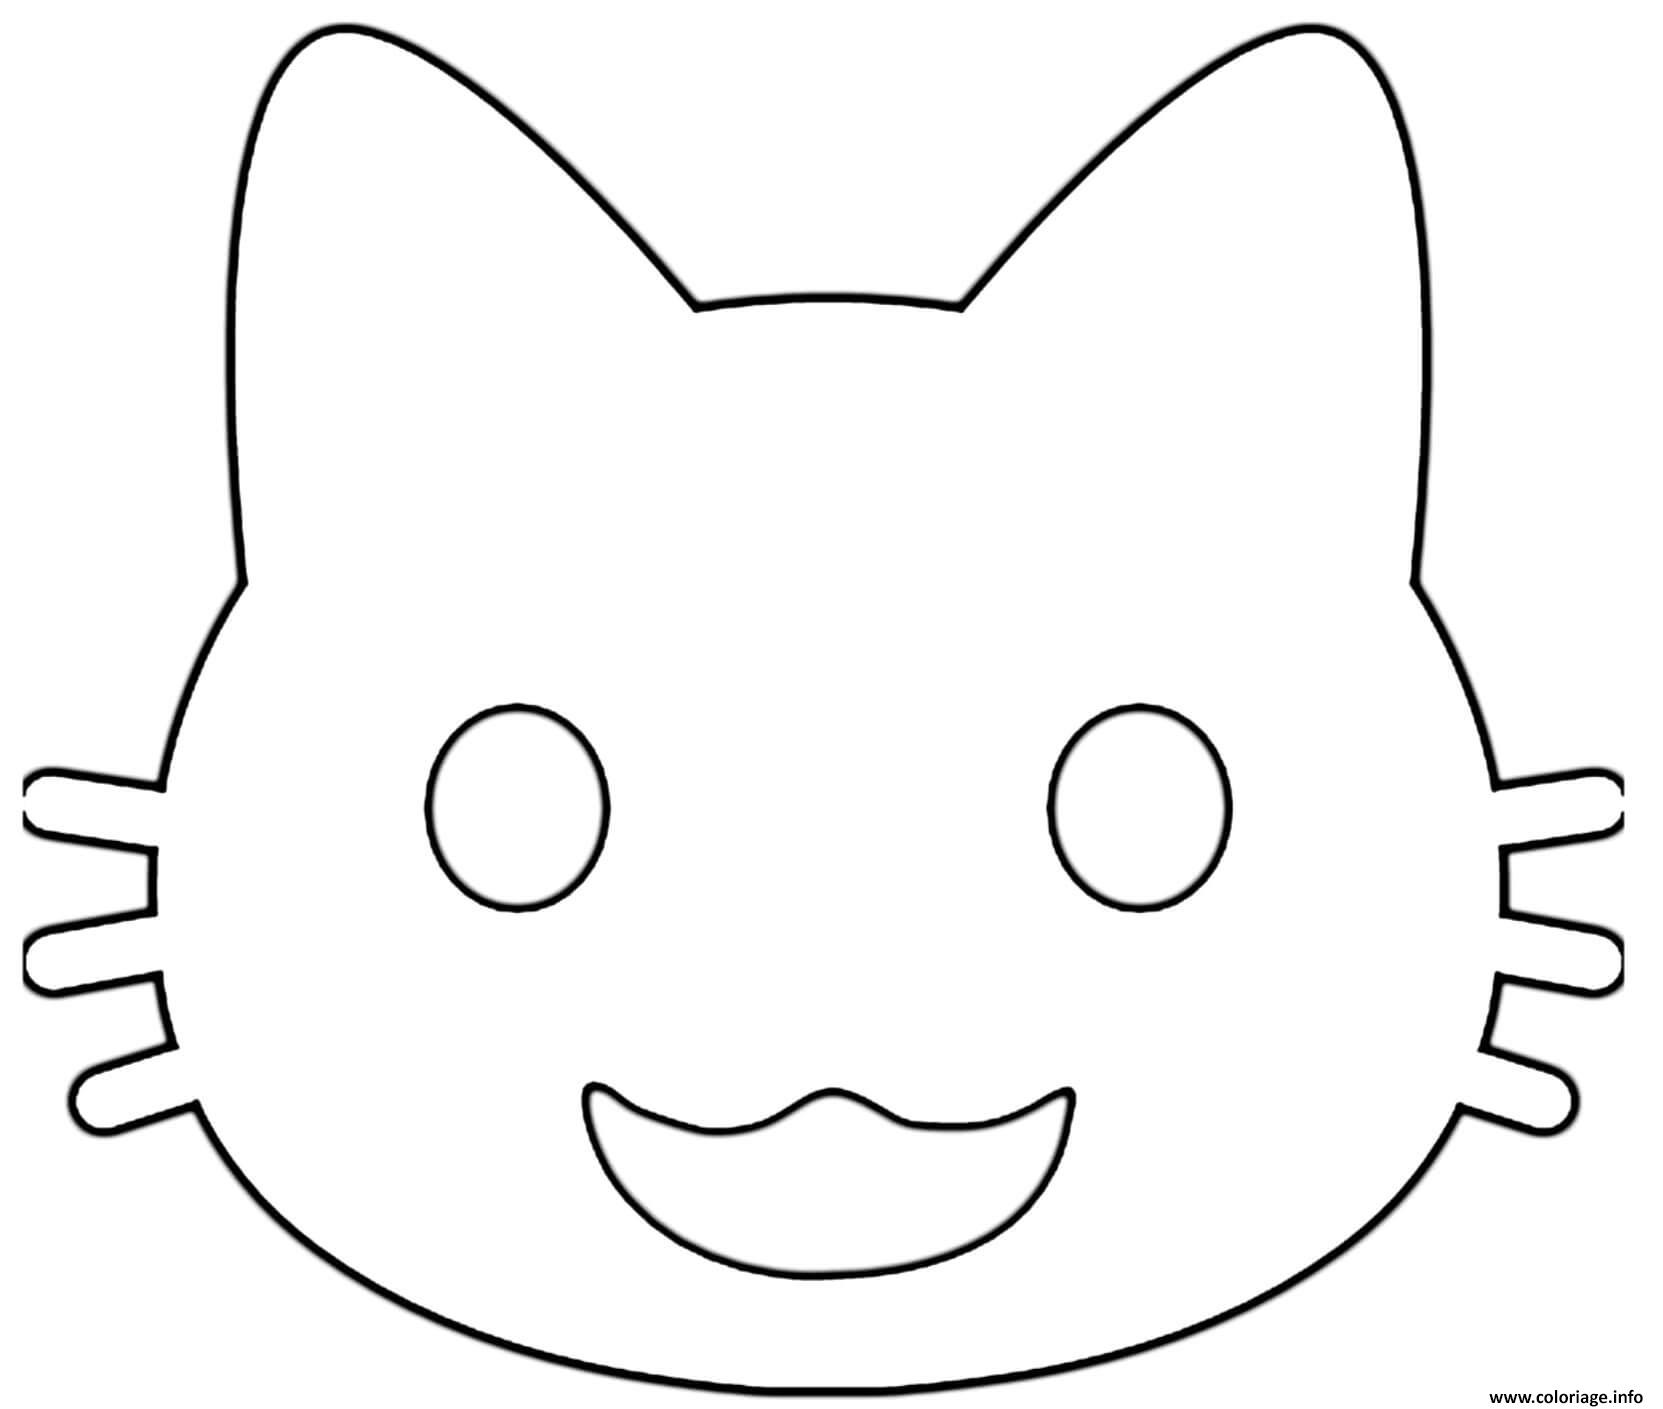 Dessin Google Emoji Smiling Cat Coloriage Gratuit à Imprimer